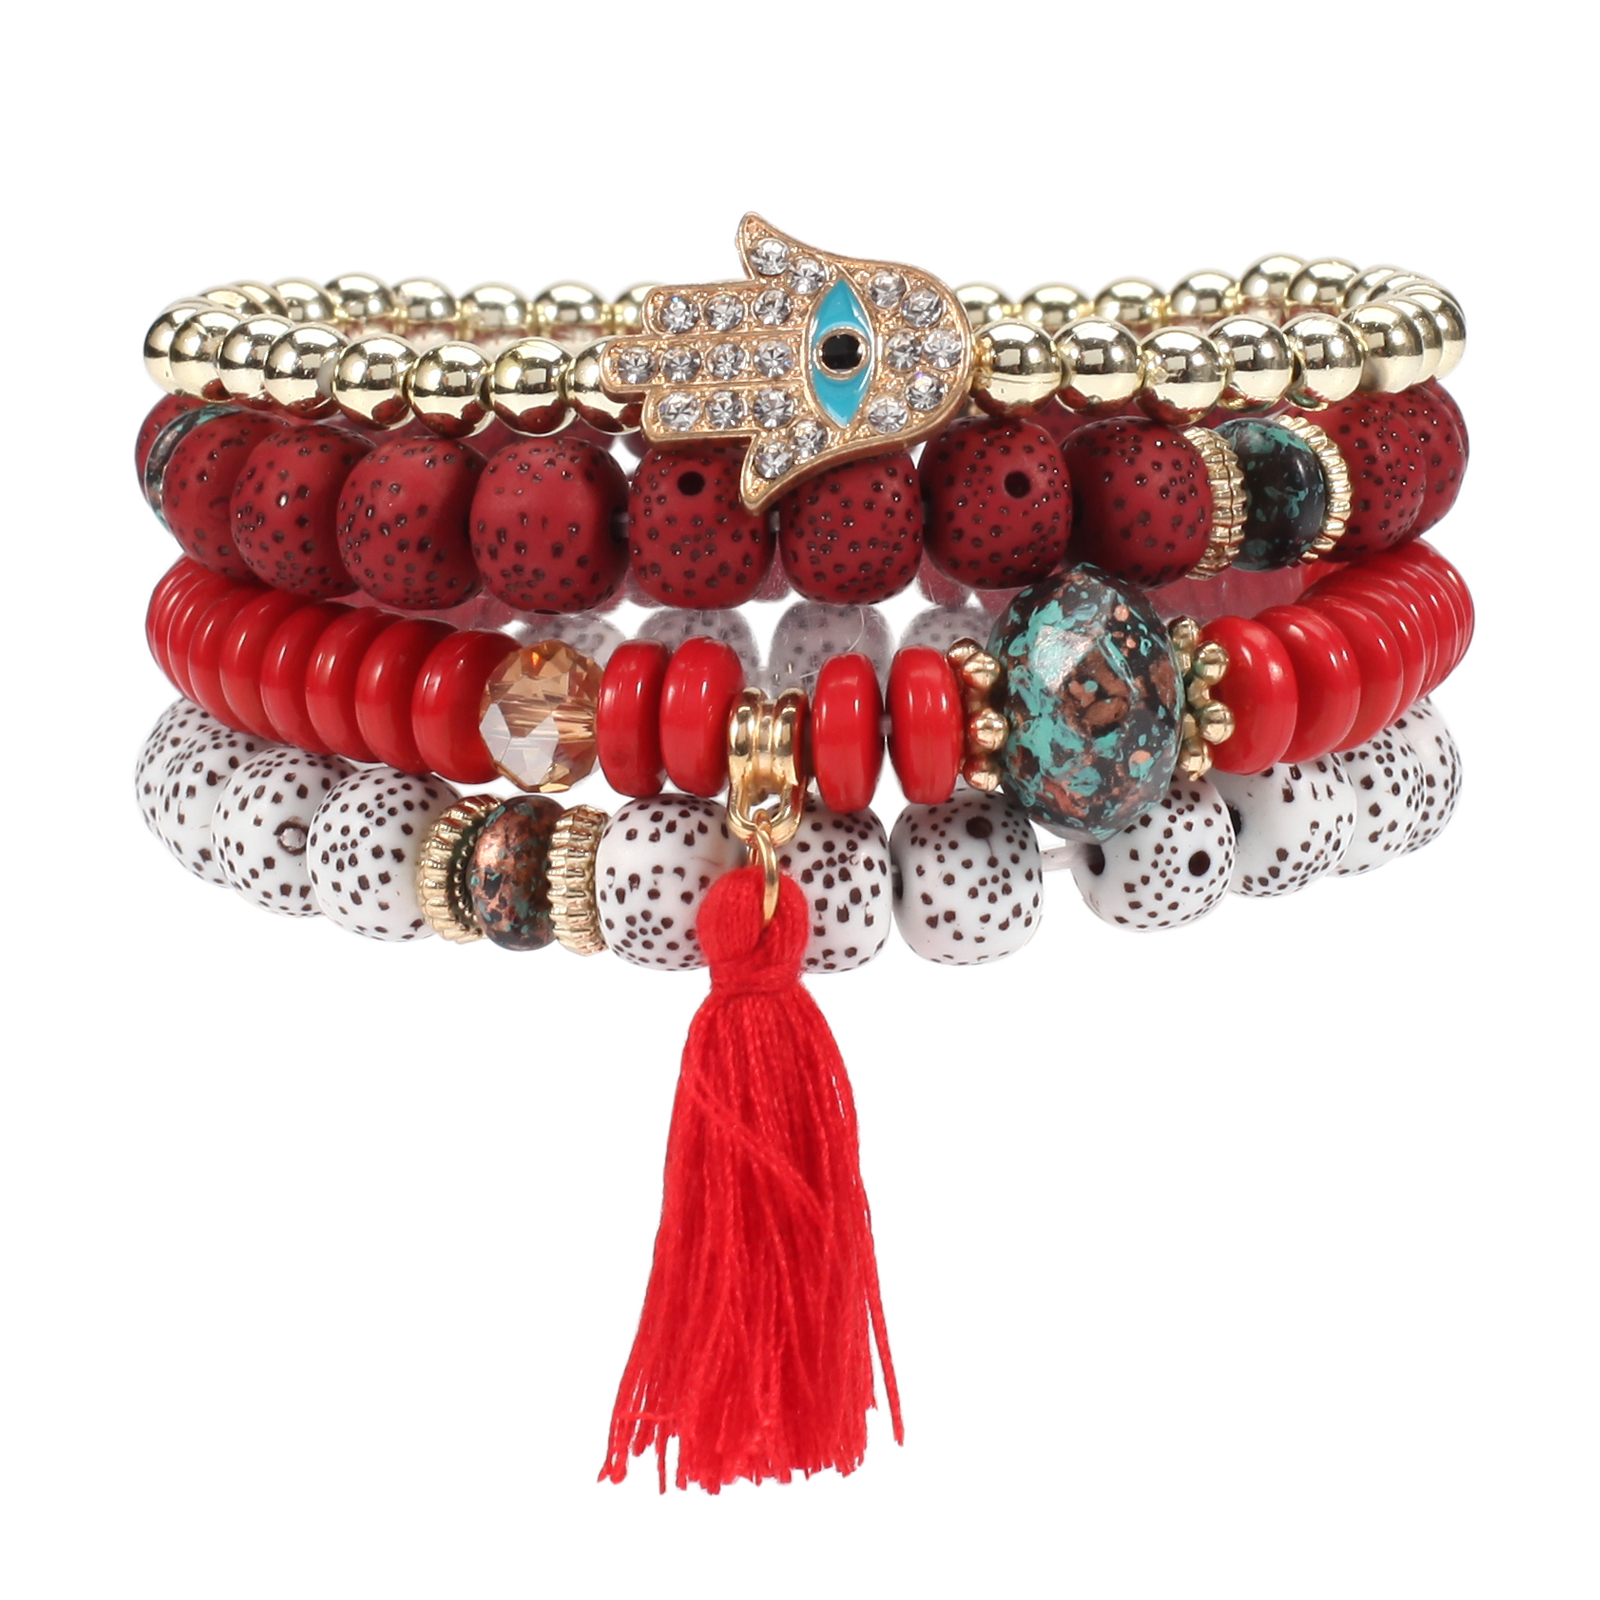 Sweet Red Crystal Beads Bracelet Rhombus Cut Beaded Bracelet For Girls And  Women